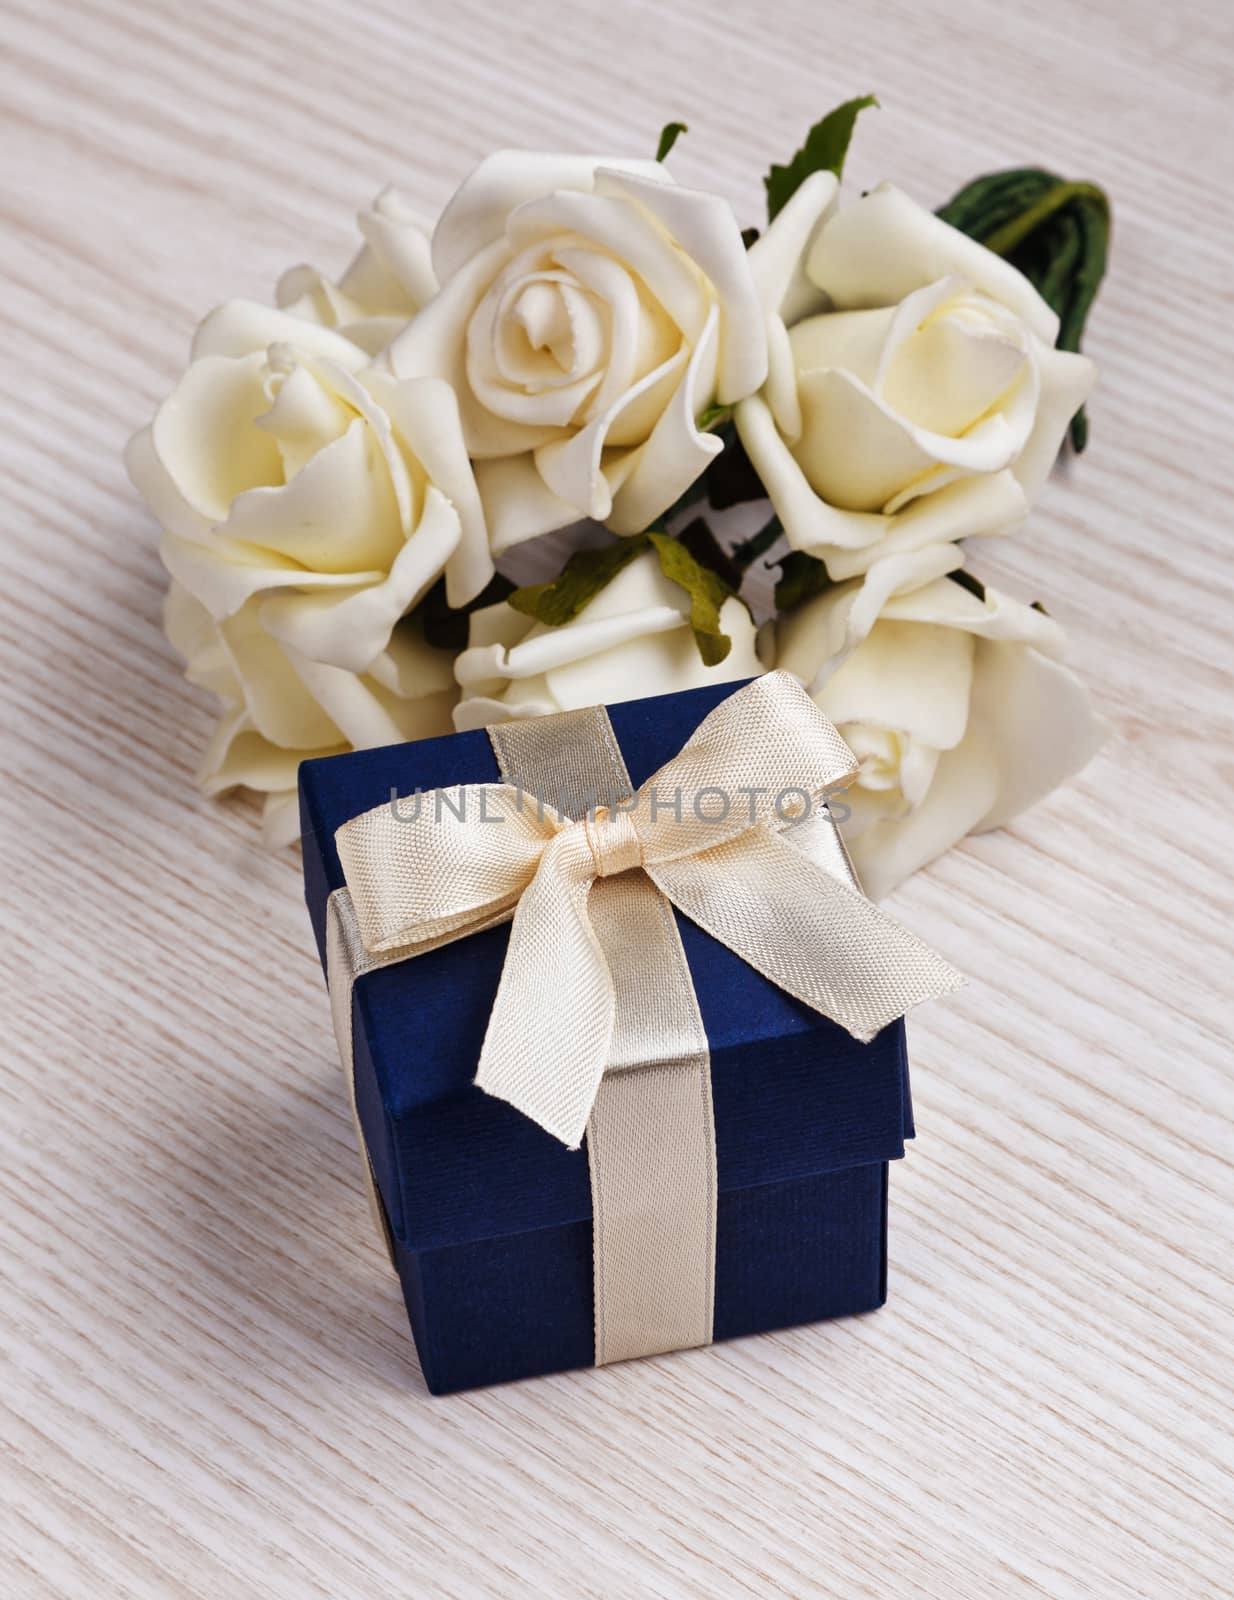 white flowers and blue gift box  by serkucher